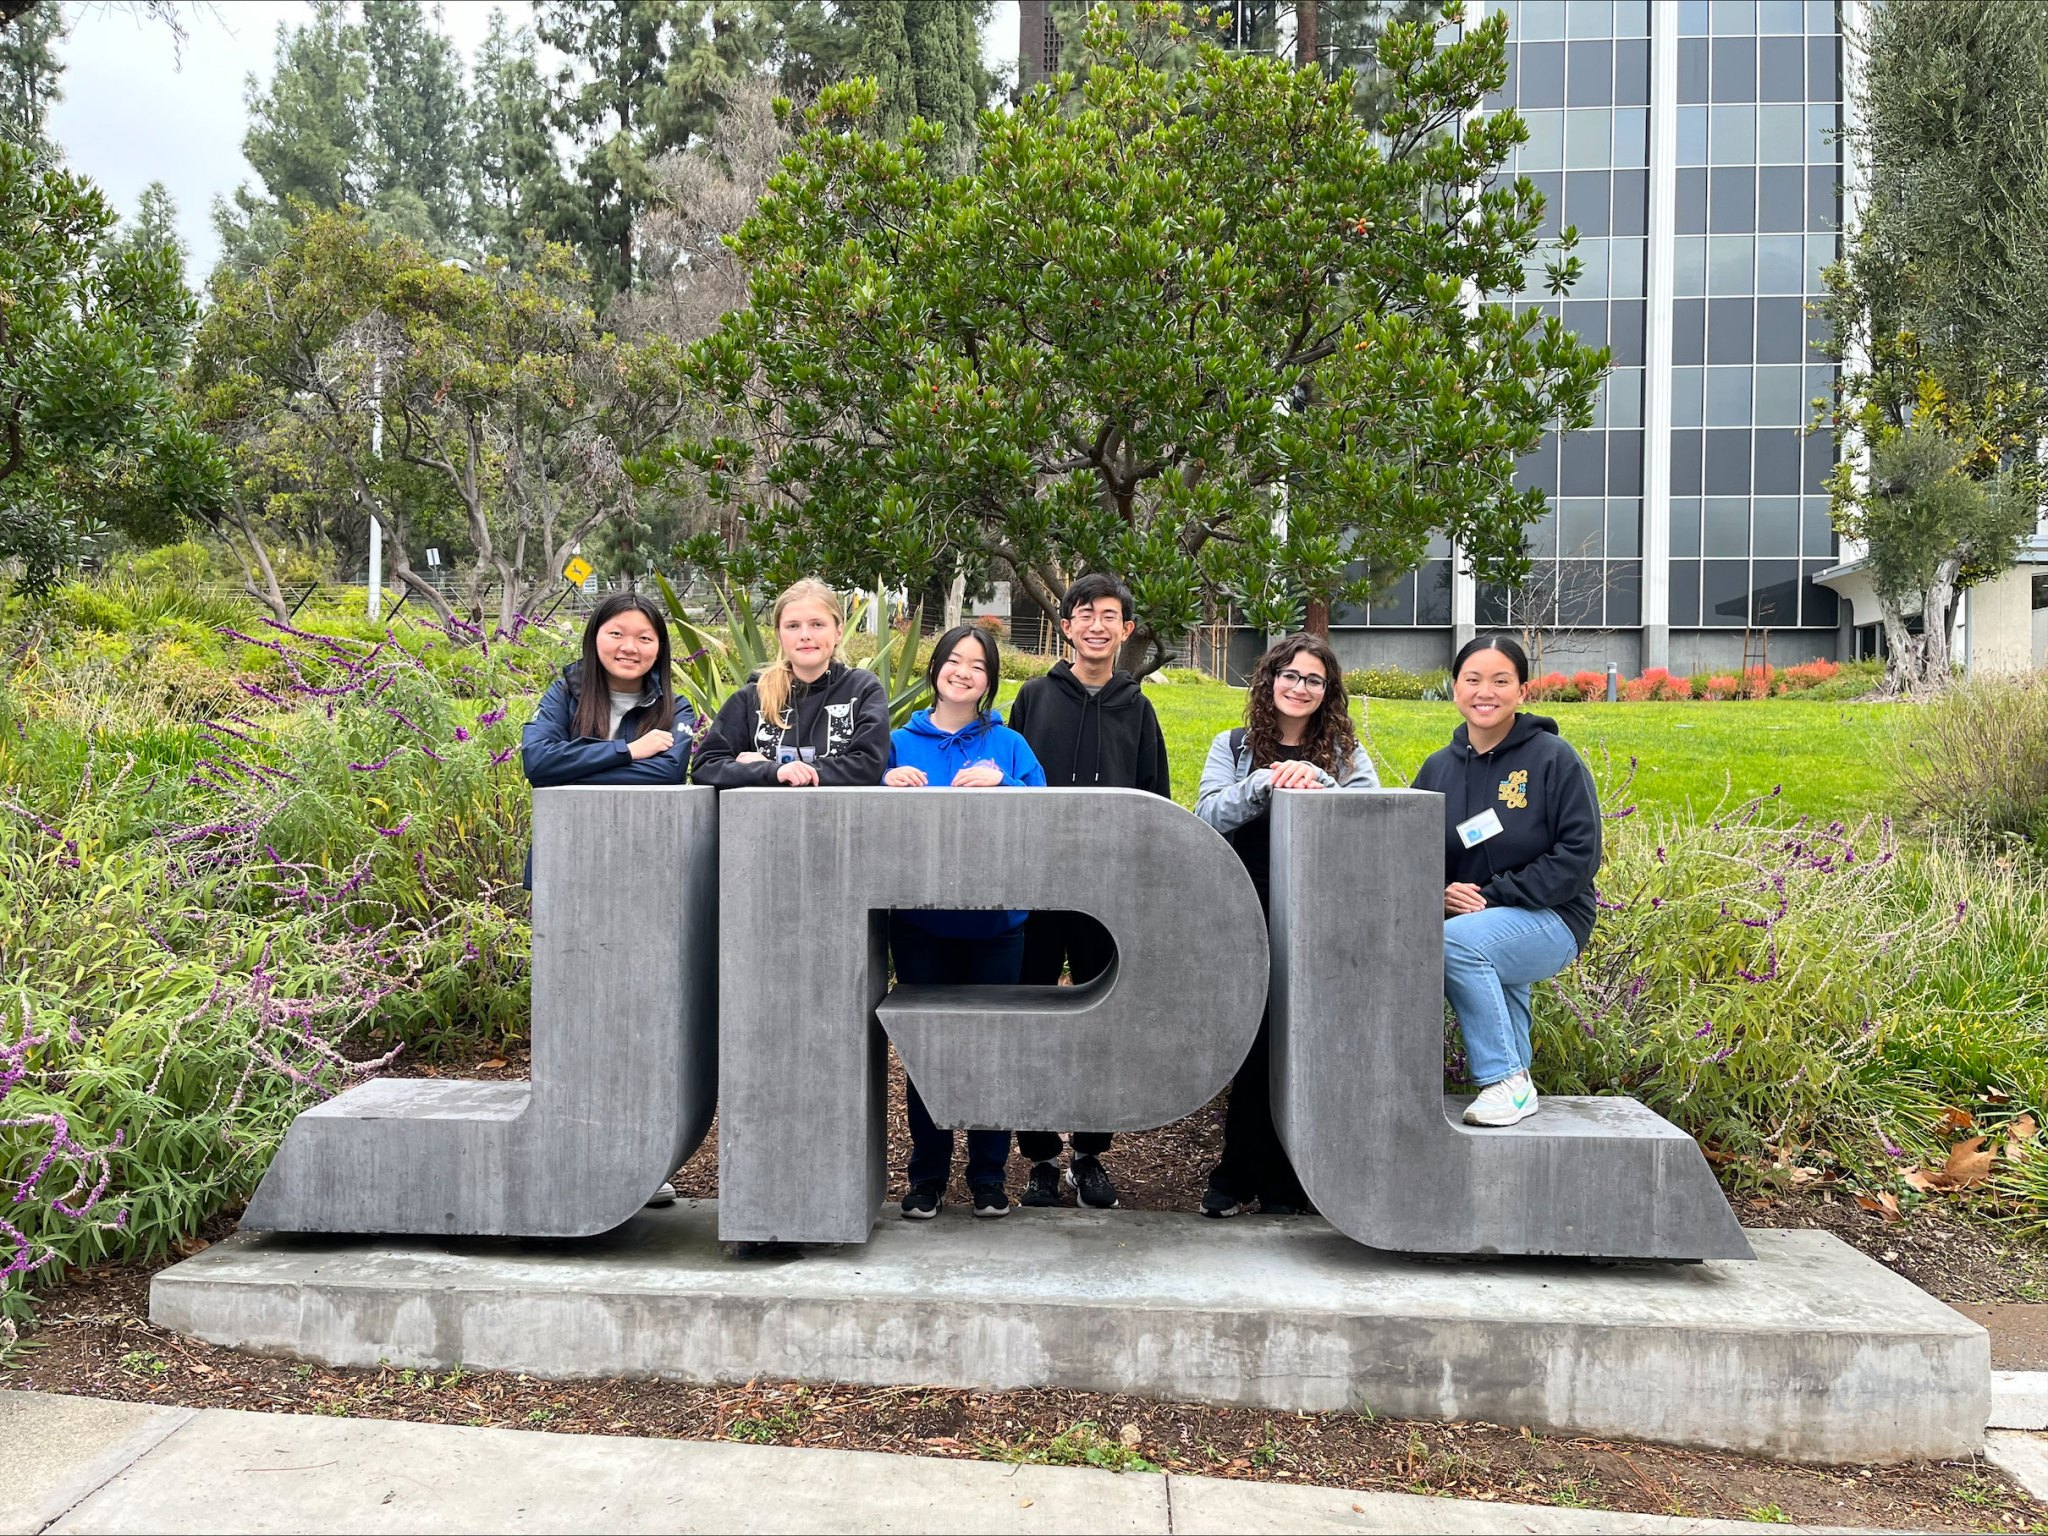 The team from University High School in Irvine, California